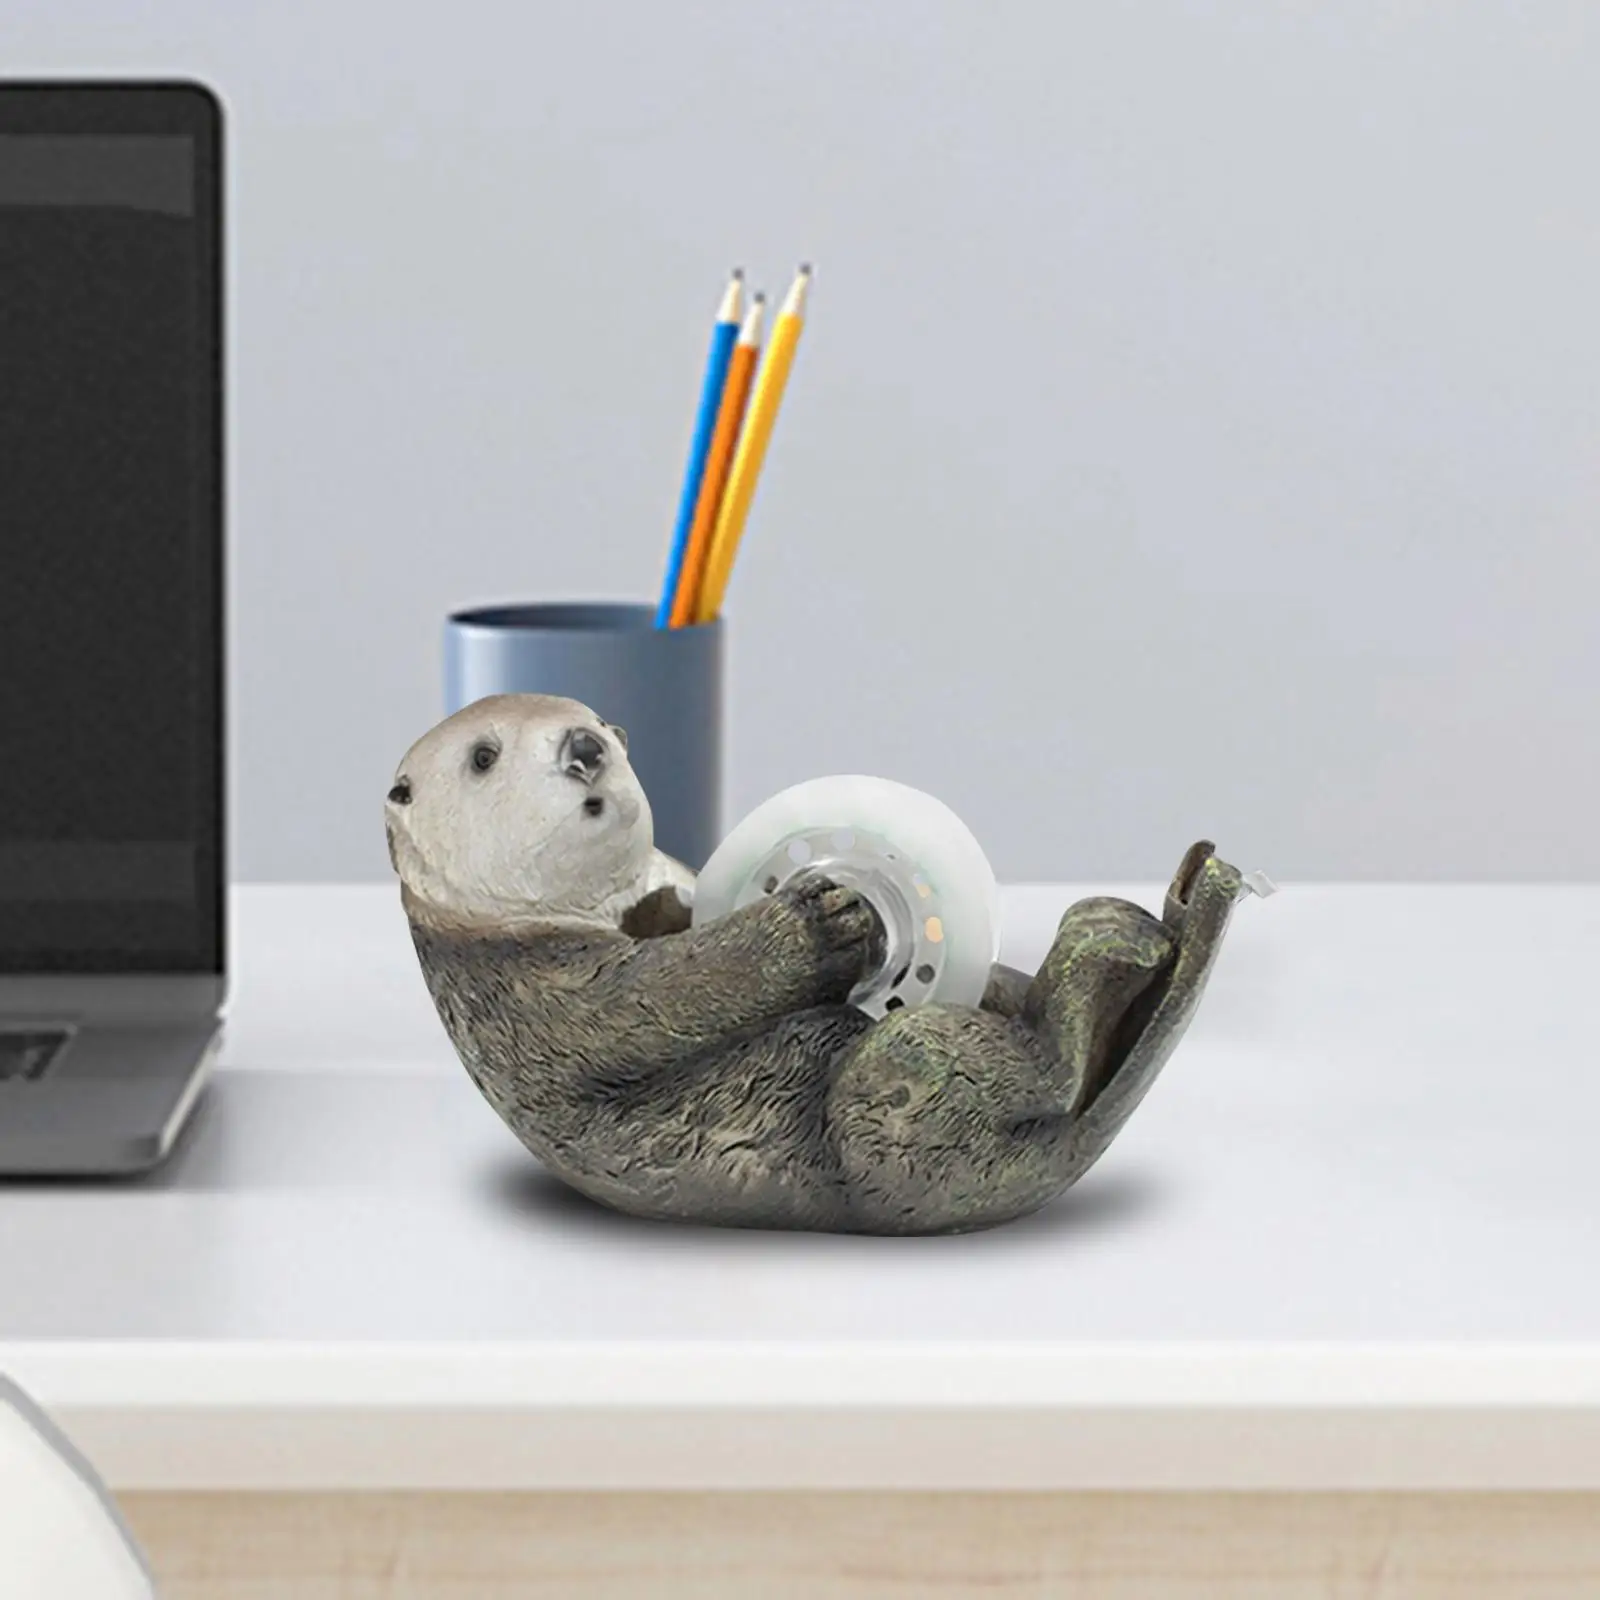 Otter Tape Dispenser Decor Cute Desk Accessory Portable Animal Figurine Roll Holder for Home Scrapbooking Desktop Office Friends